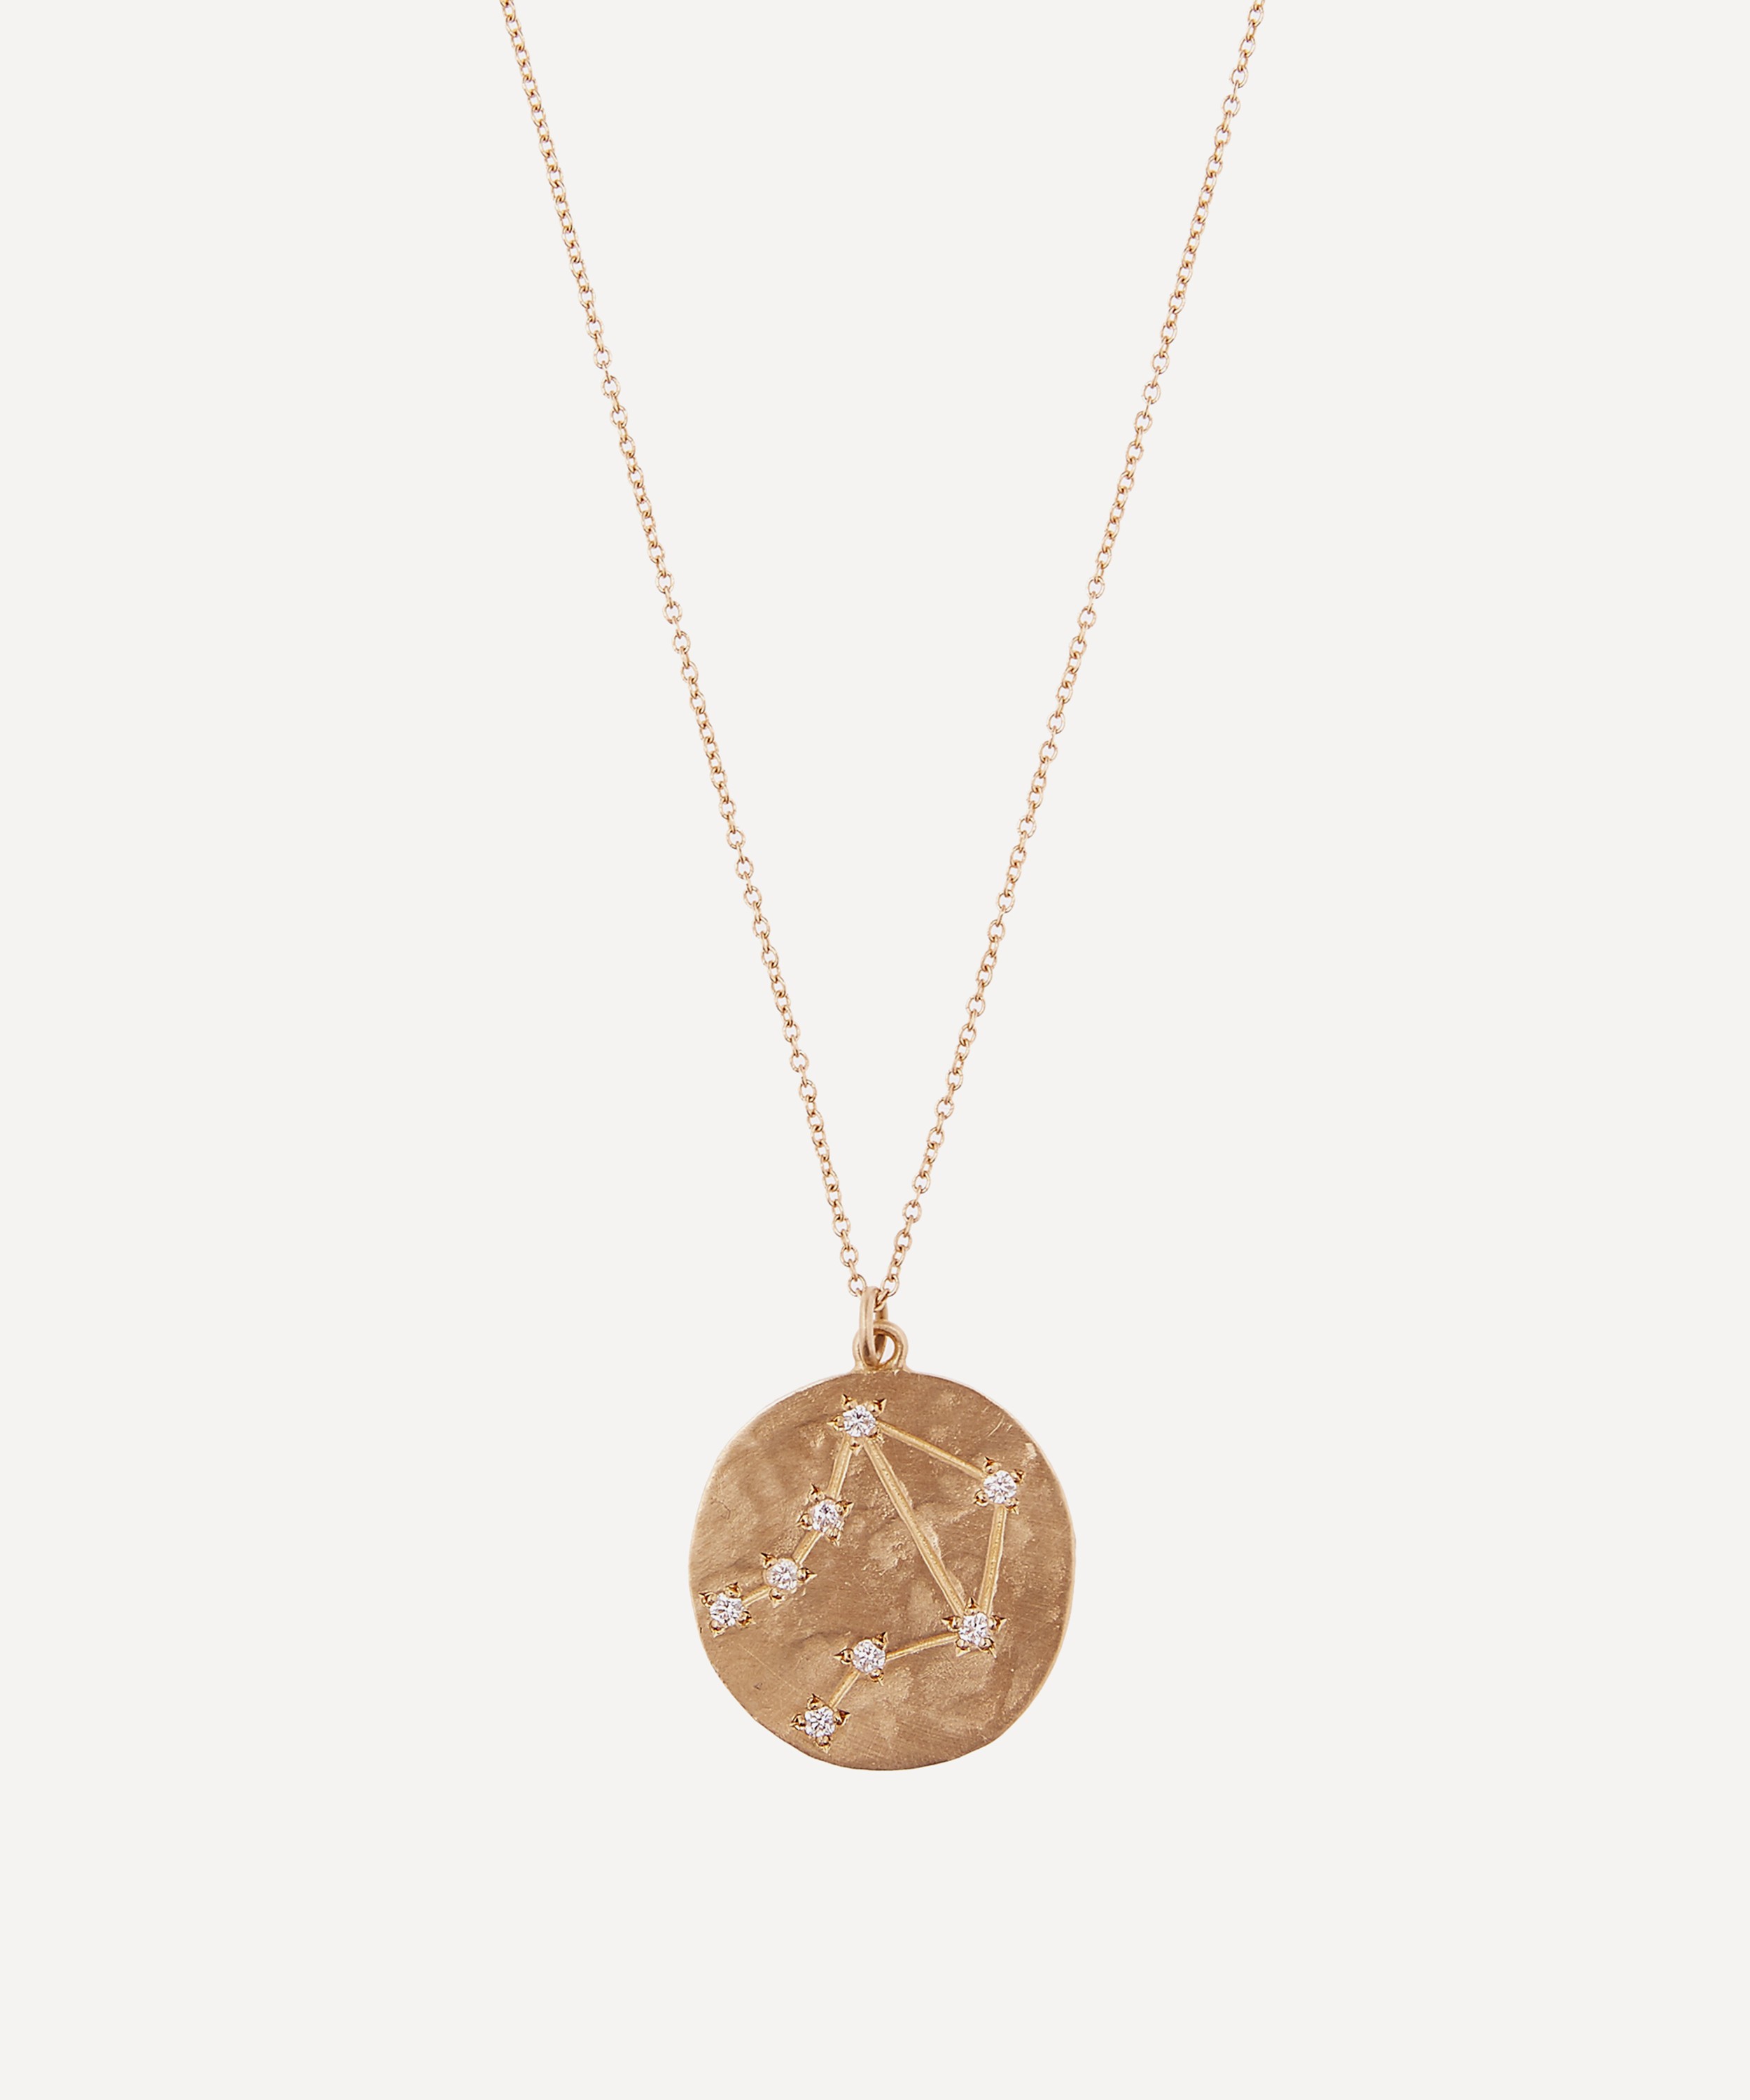 Brooke Gregson - 14ct Gold Libra Astrology Diamond Necklace